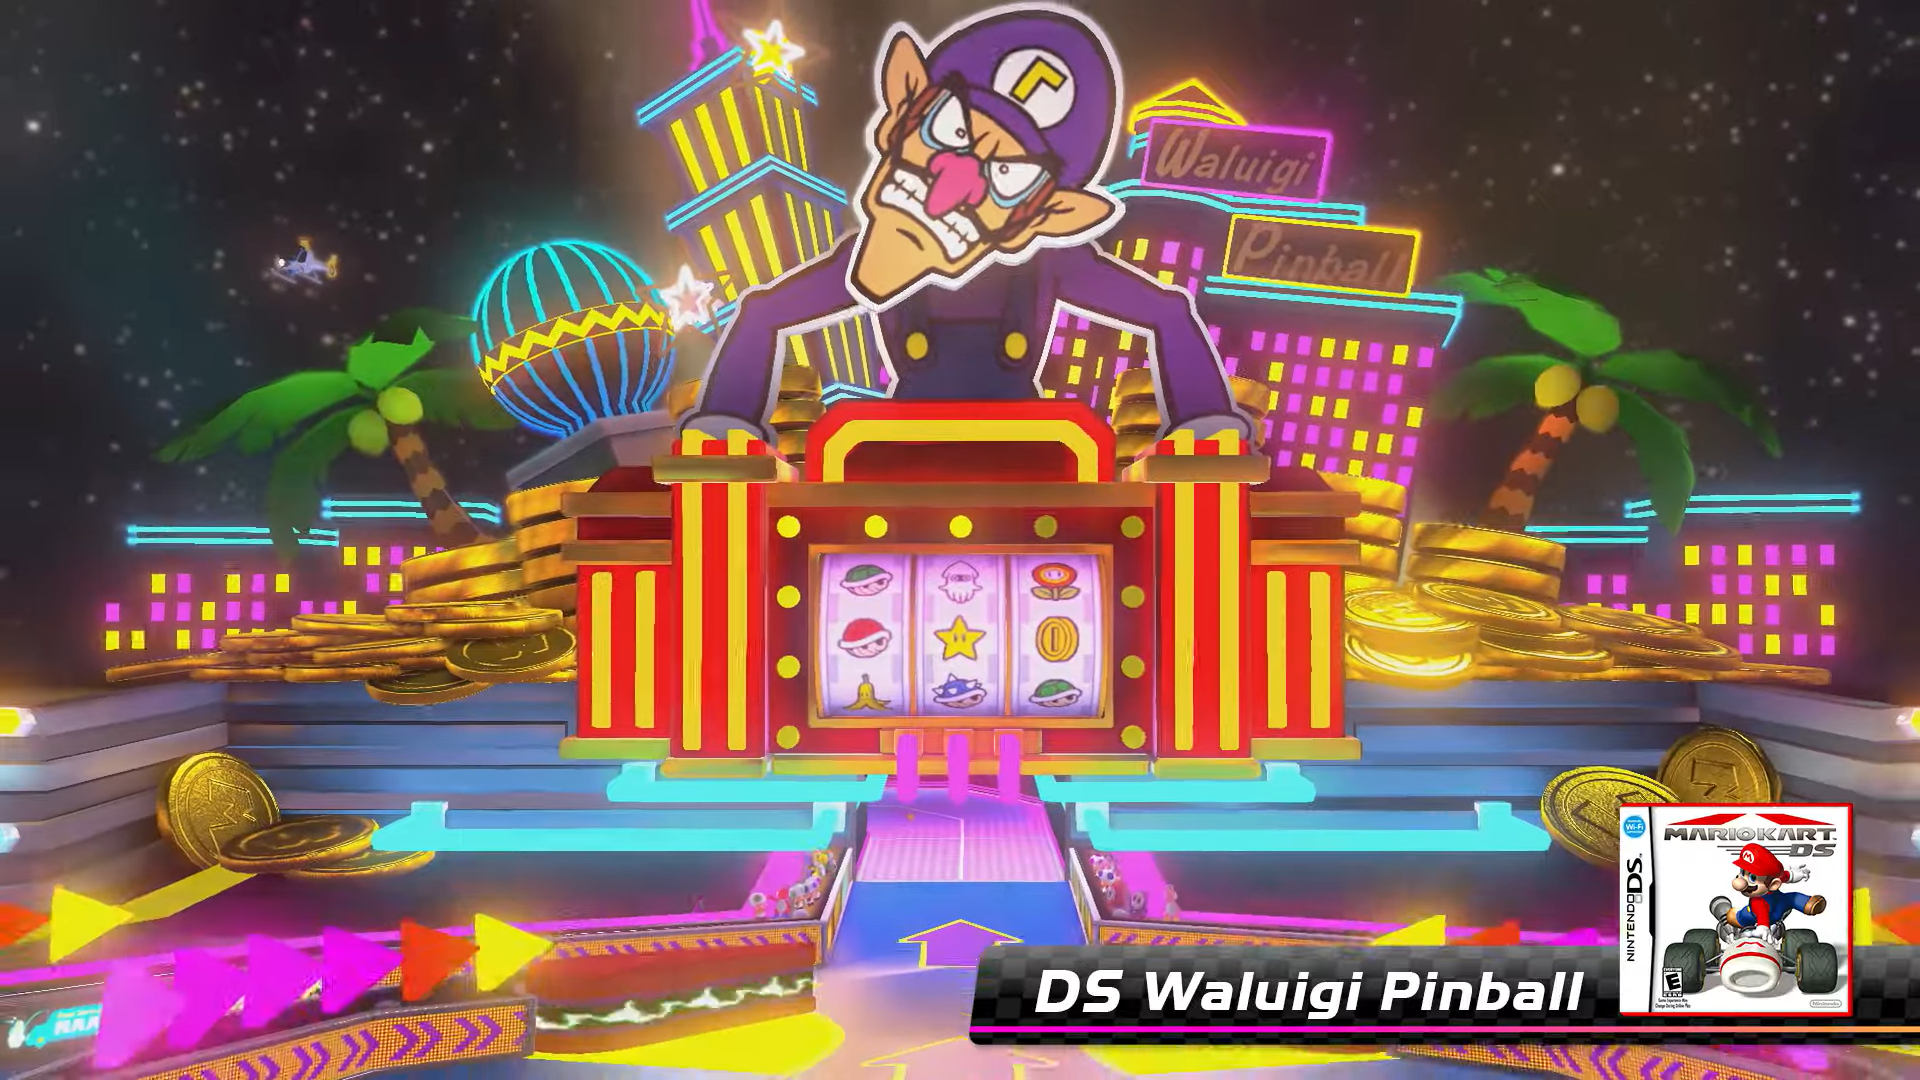 Mario Kart 8 Deluxe is getting eight new tracks, including Waluigi Pinball